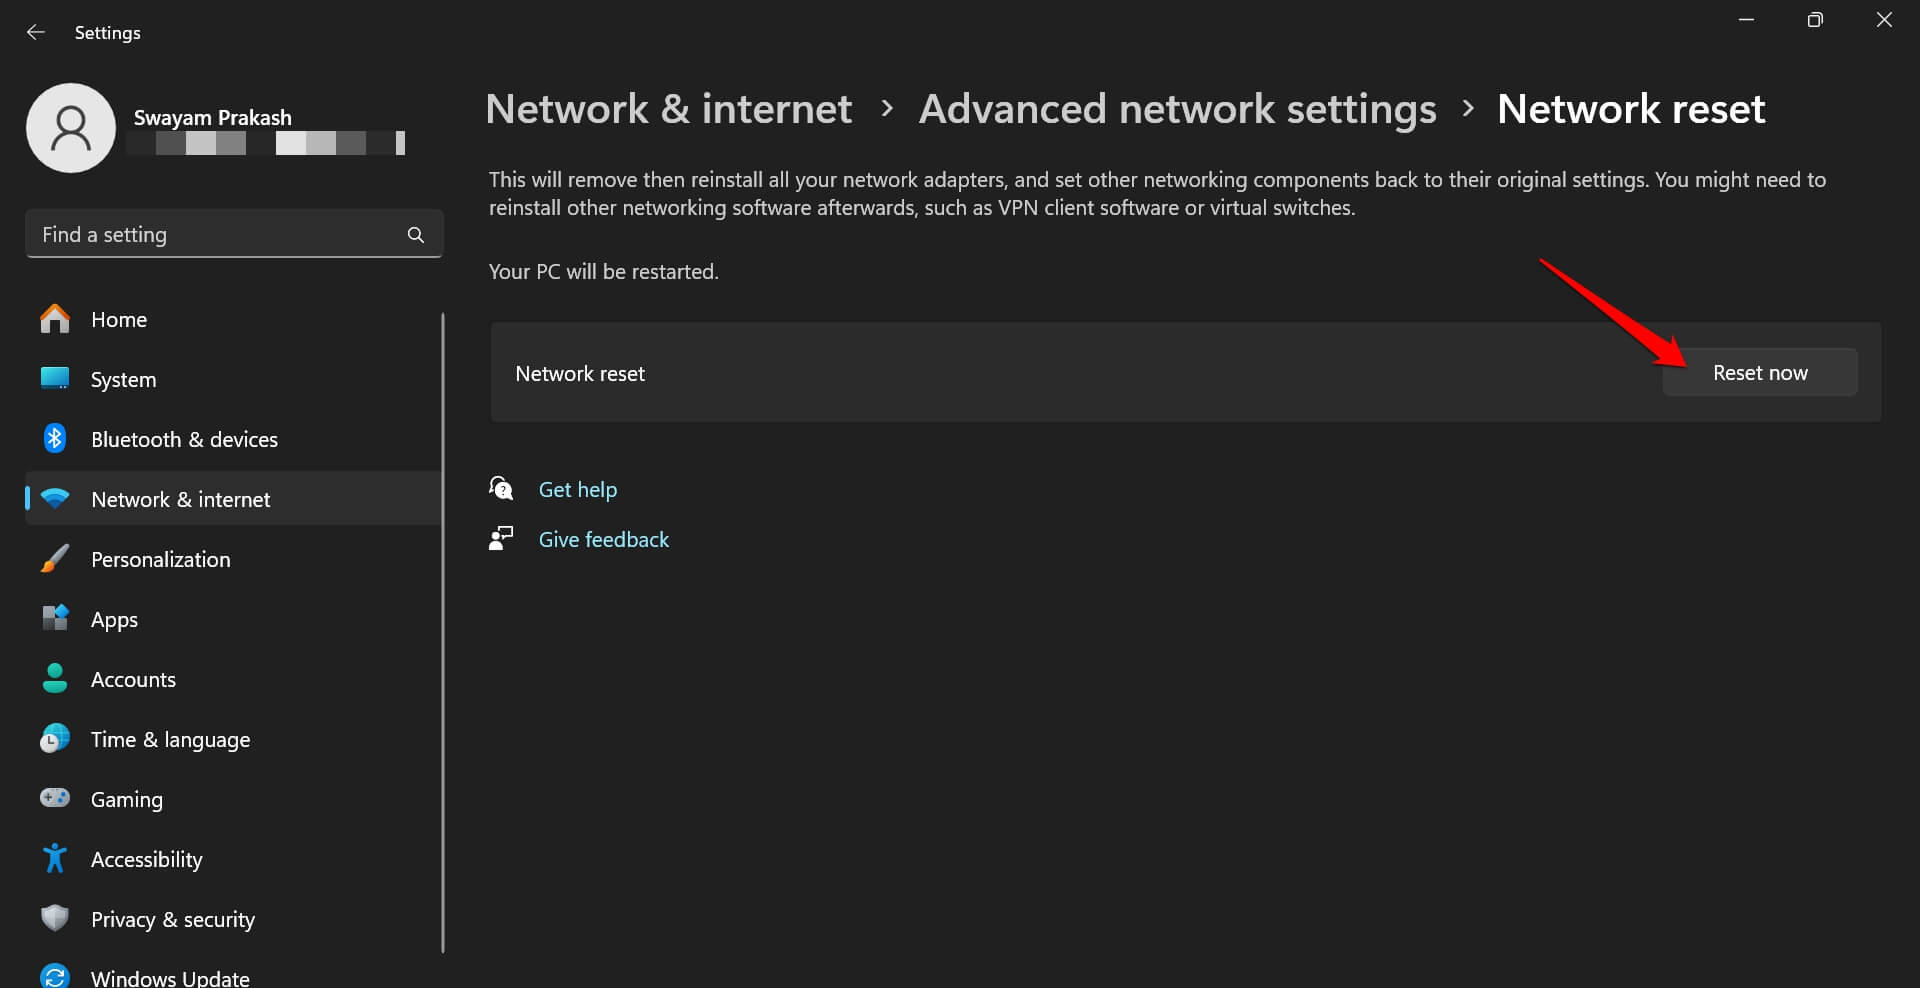 reset-network-now